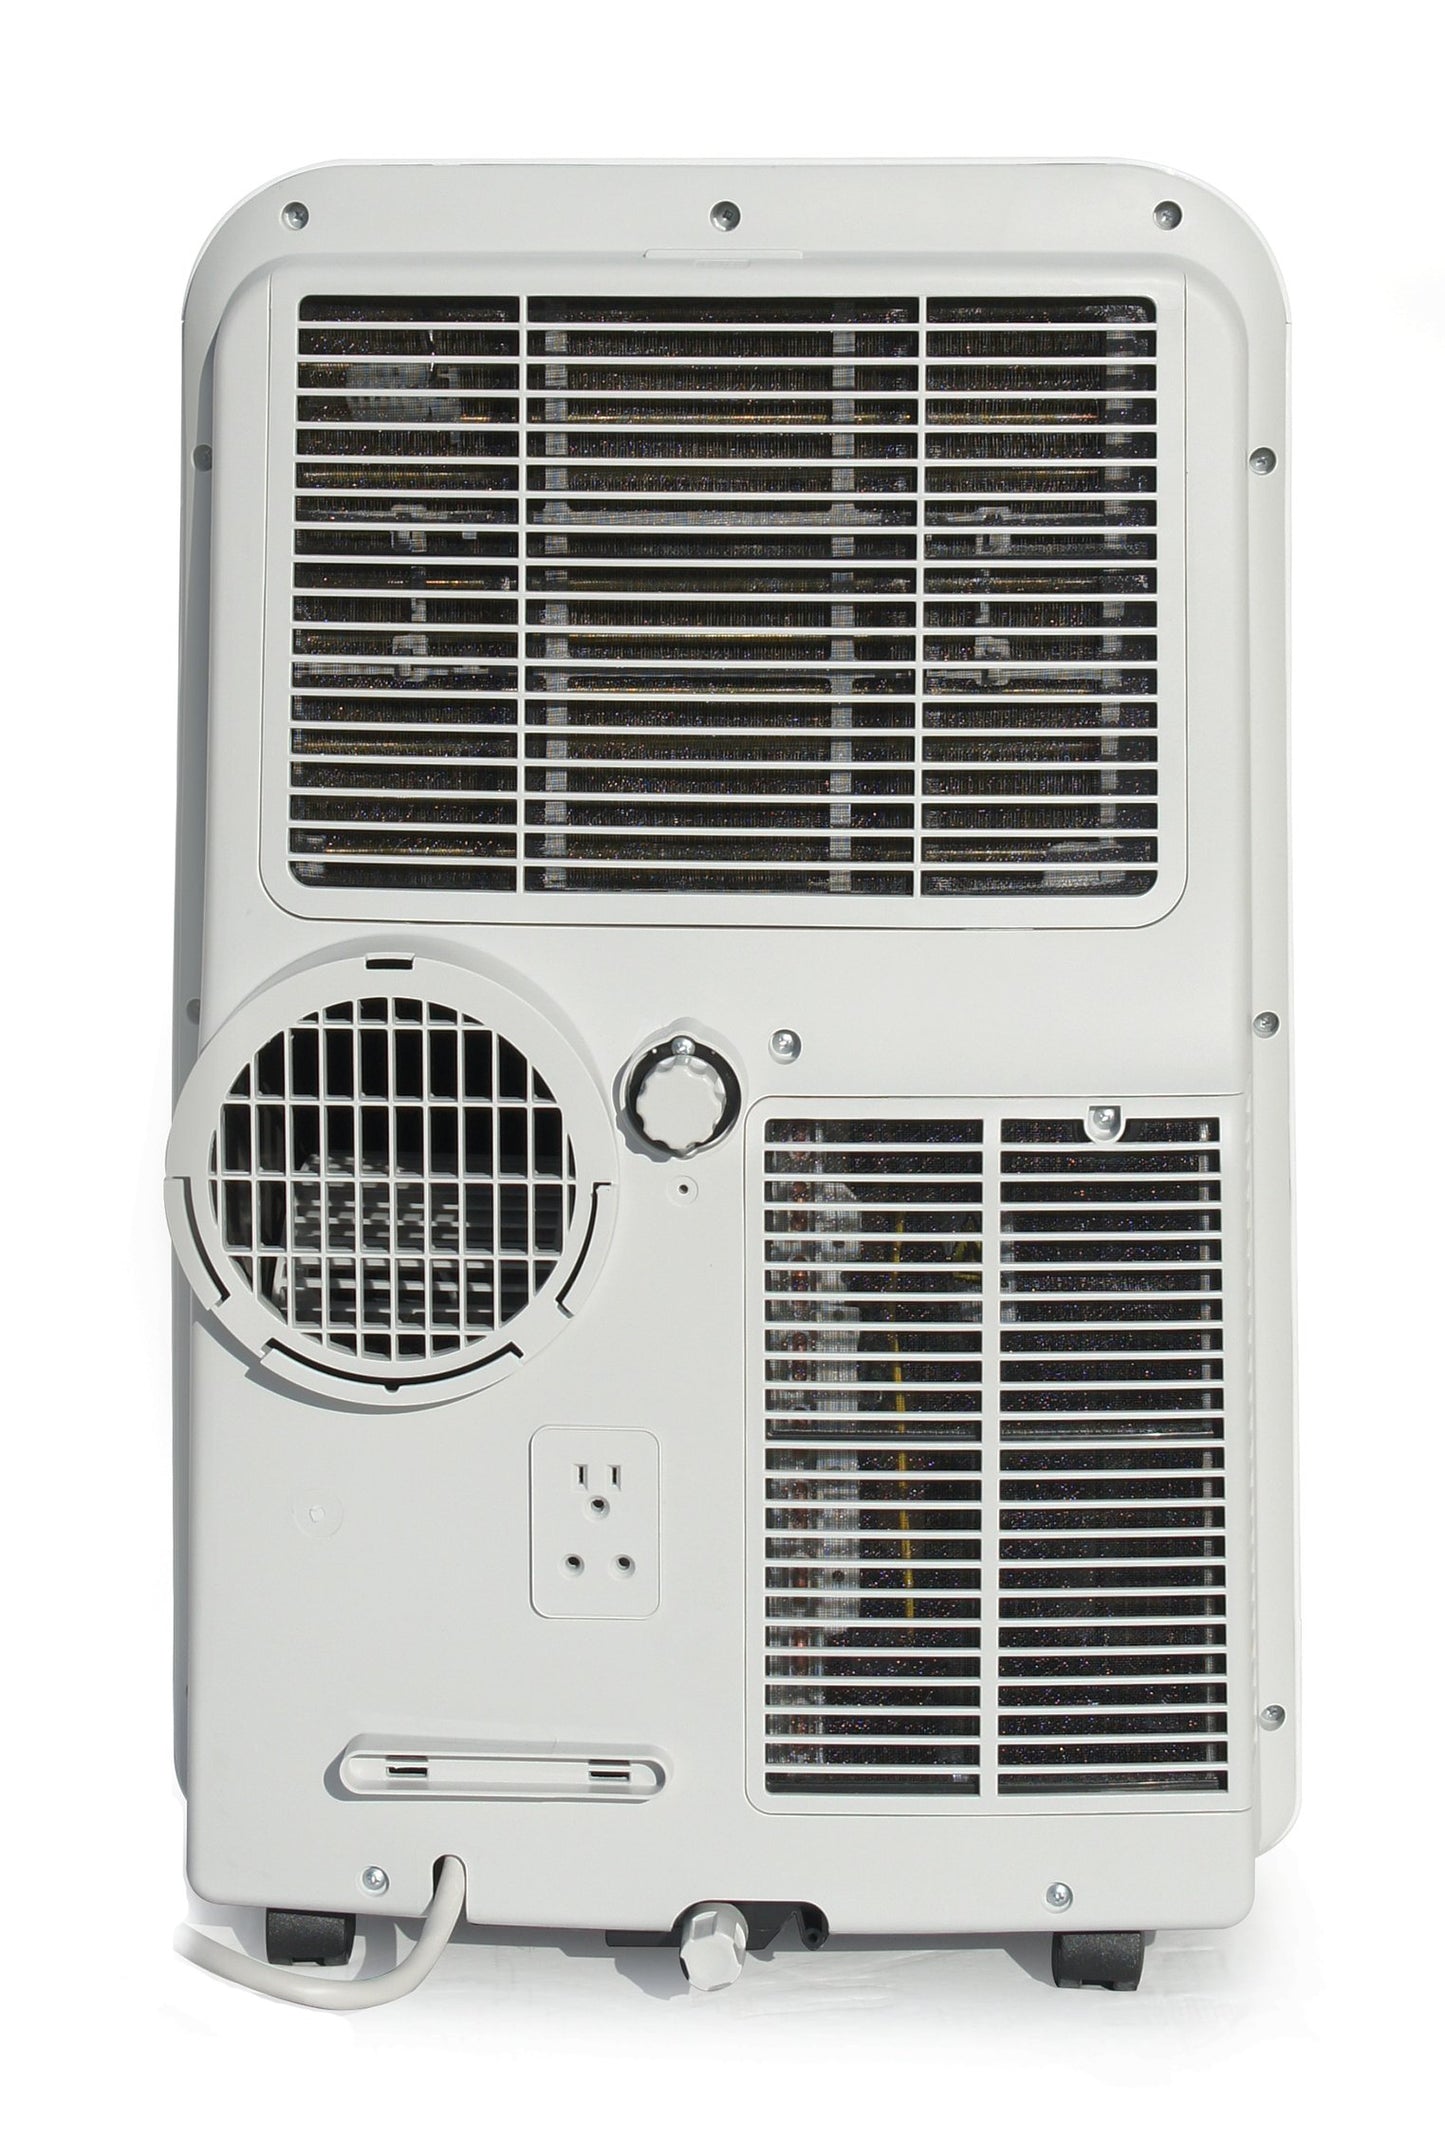 [SPT WA-S8001E] Portable Air Conditioner| 12,000BTU| 3 Fan Speeds| For 150-350 sq. ft.